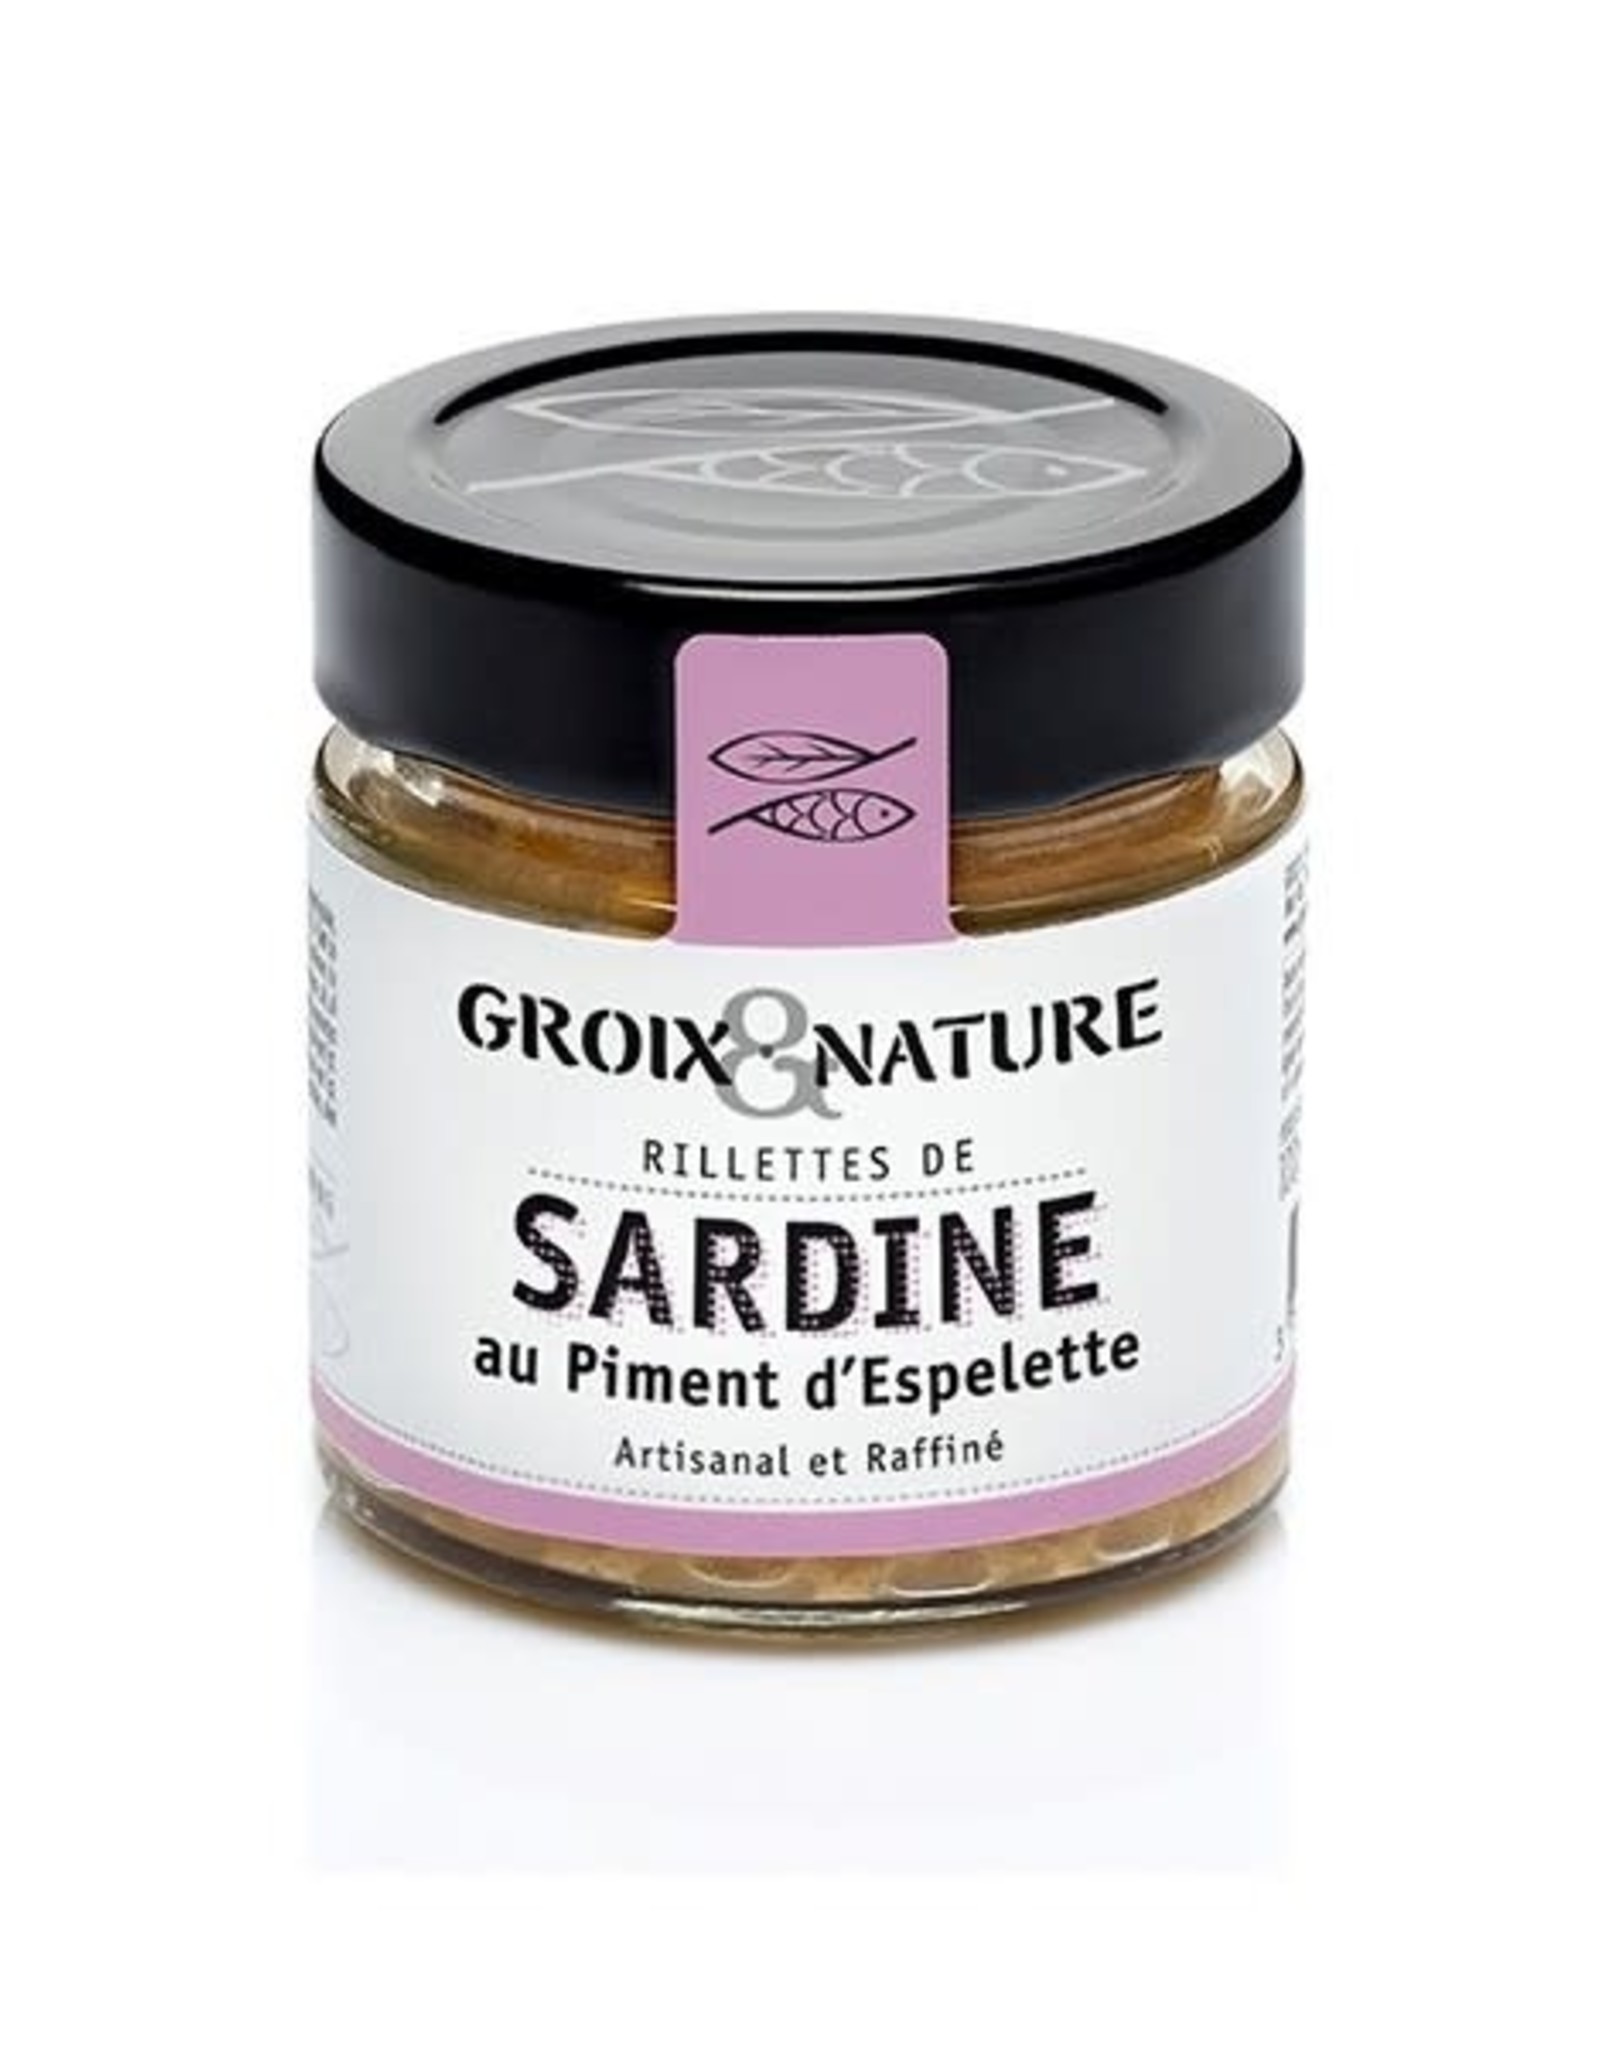 Groix Nature Sardine Rillettes with Espelette Chilies